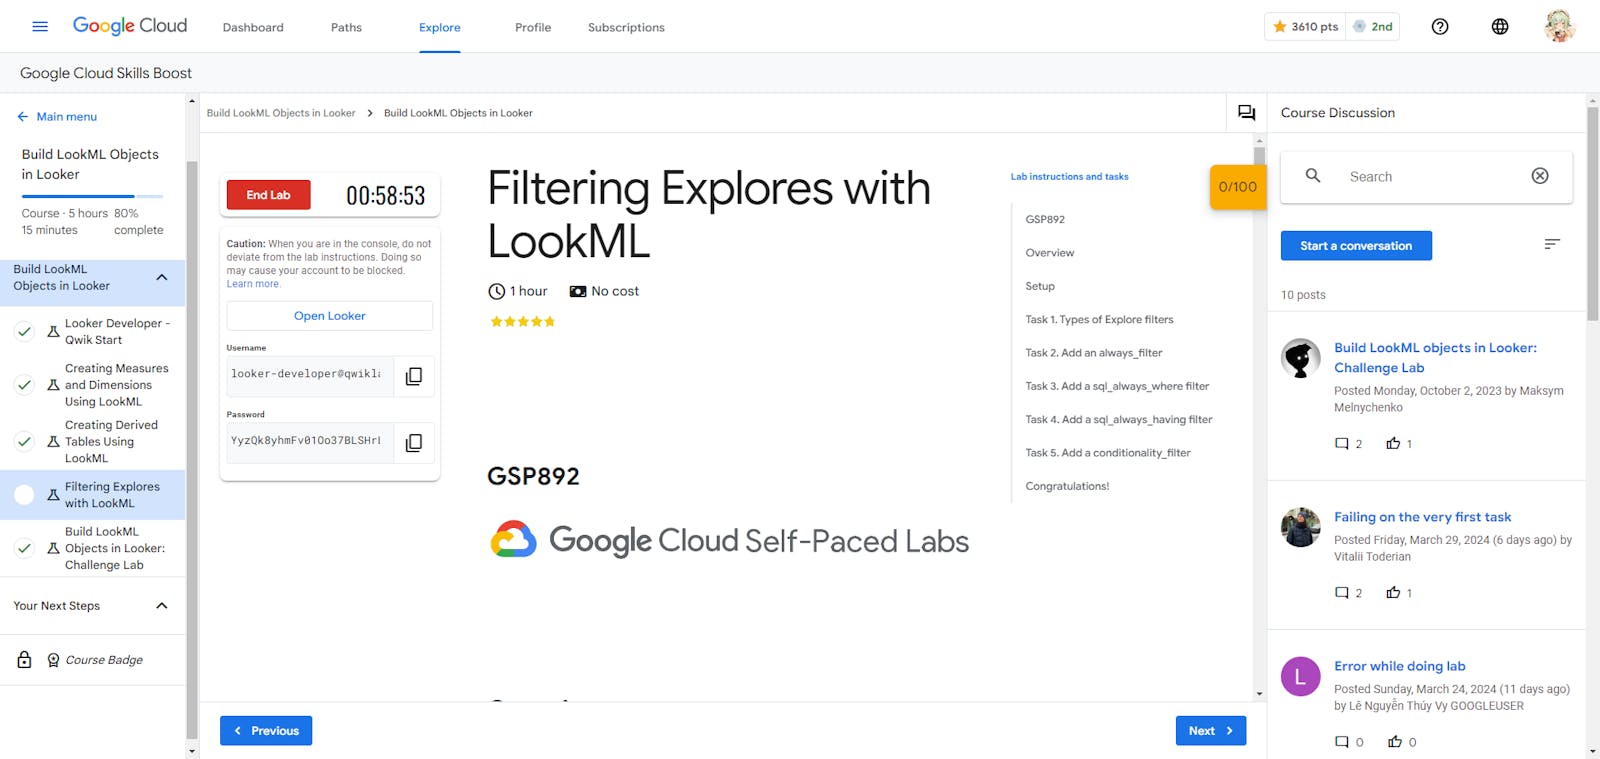 Filtering Explores with LookML - GSP892